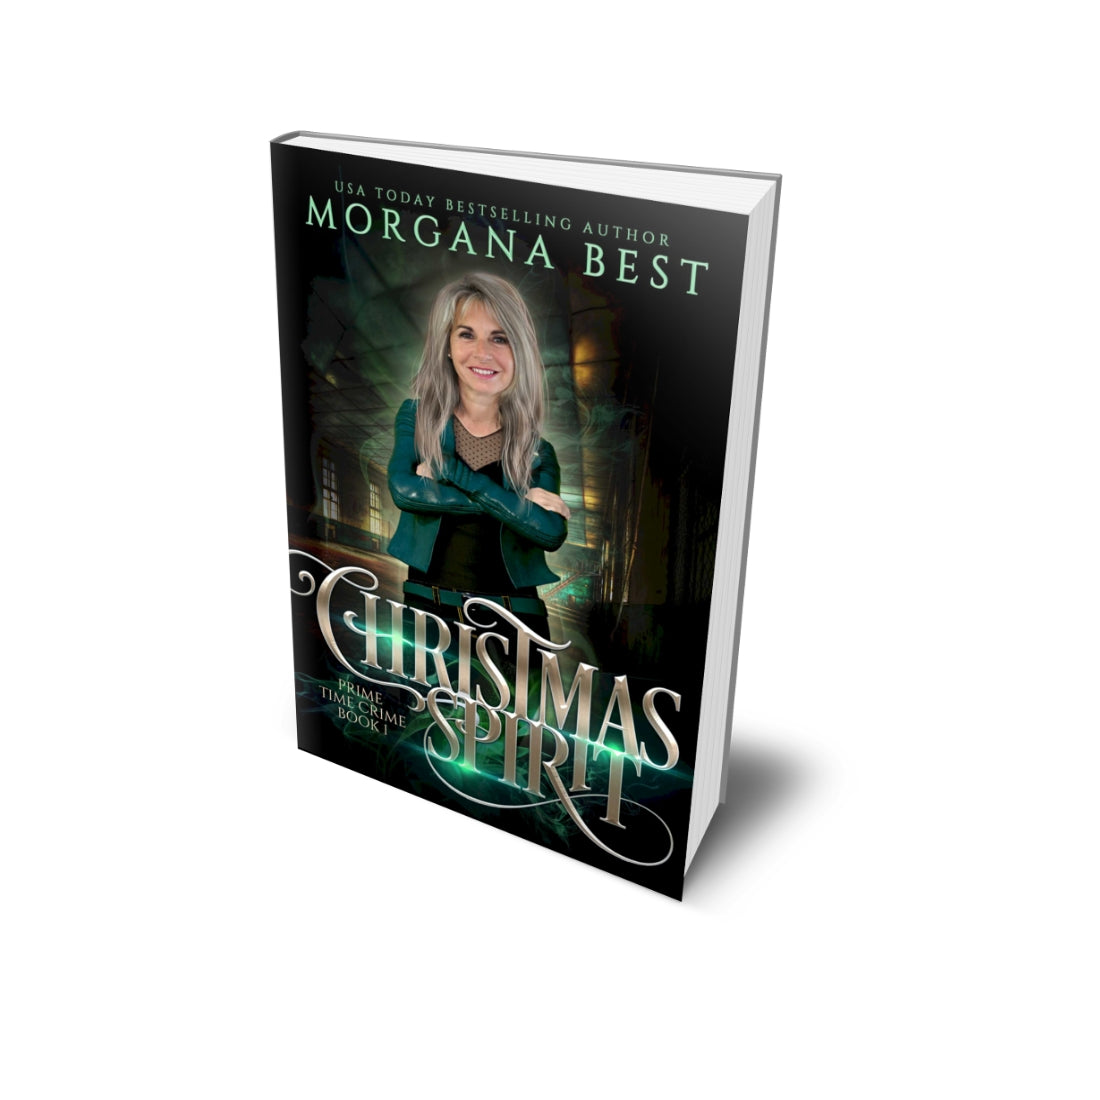 Christmas Spirit paperback cozy mystery by morgana best